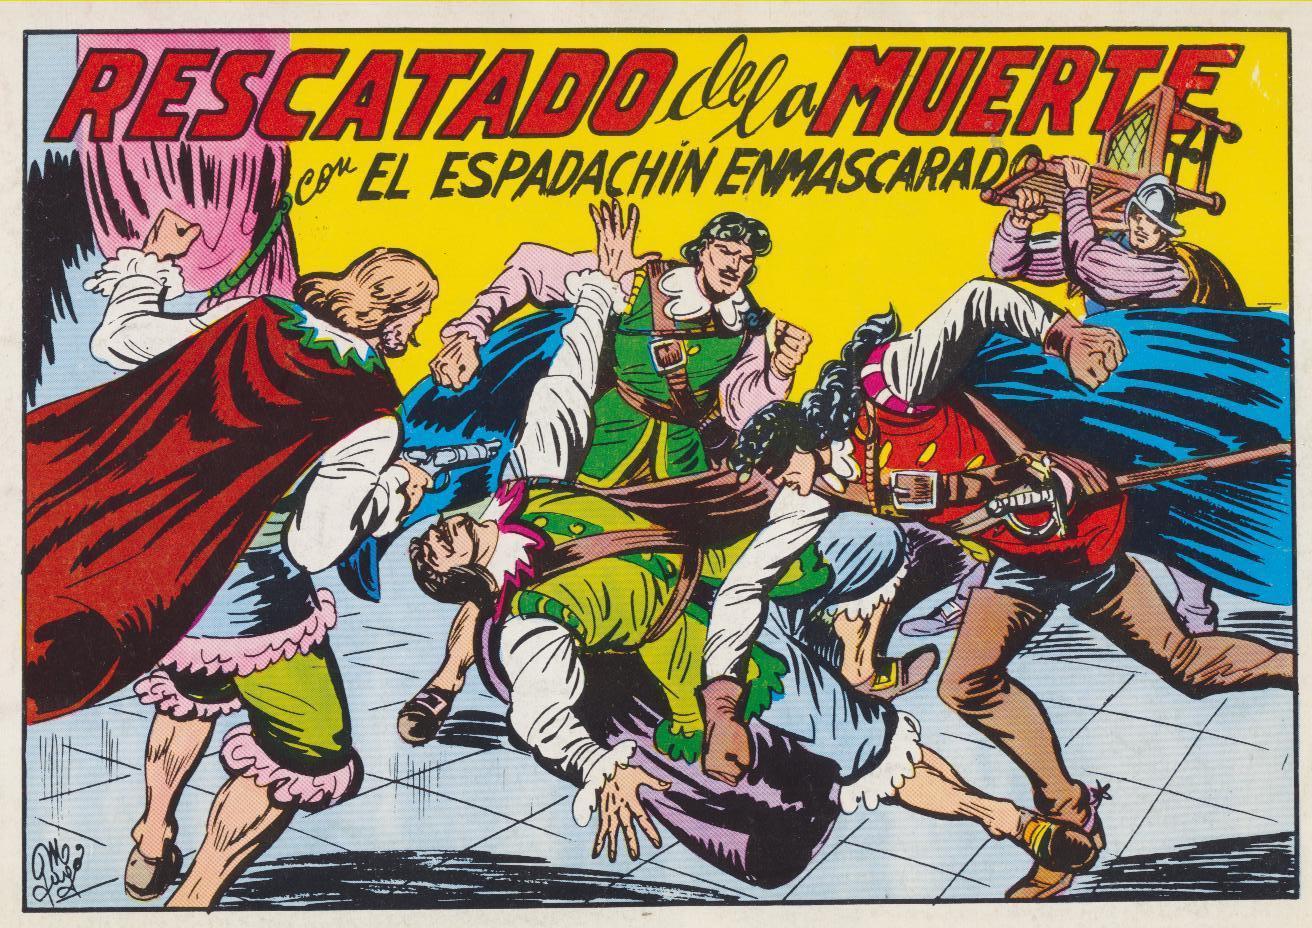 El Espadachín Enmascarado 2ª nº 51. 3 en 1. Valenciana 1981